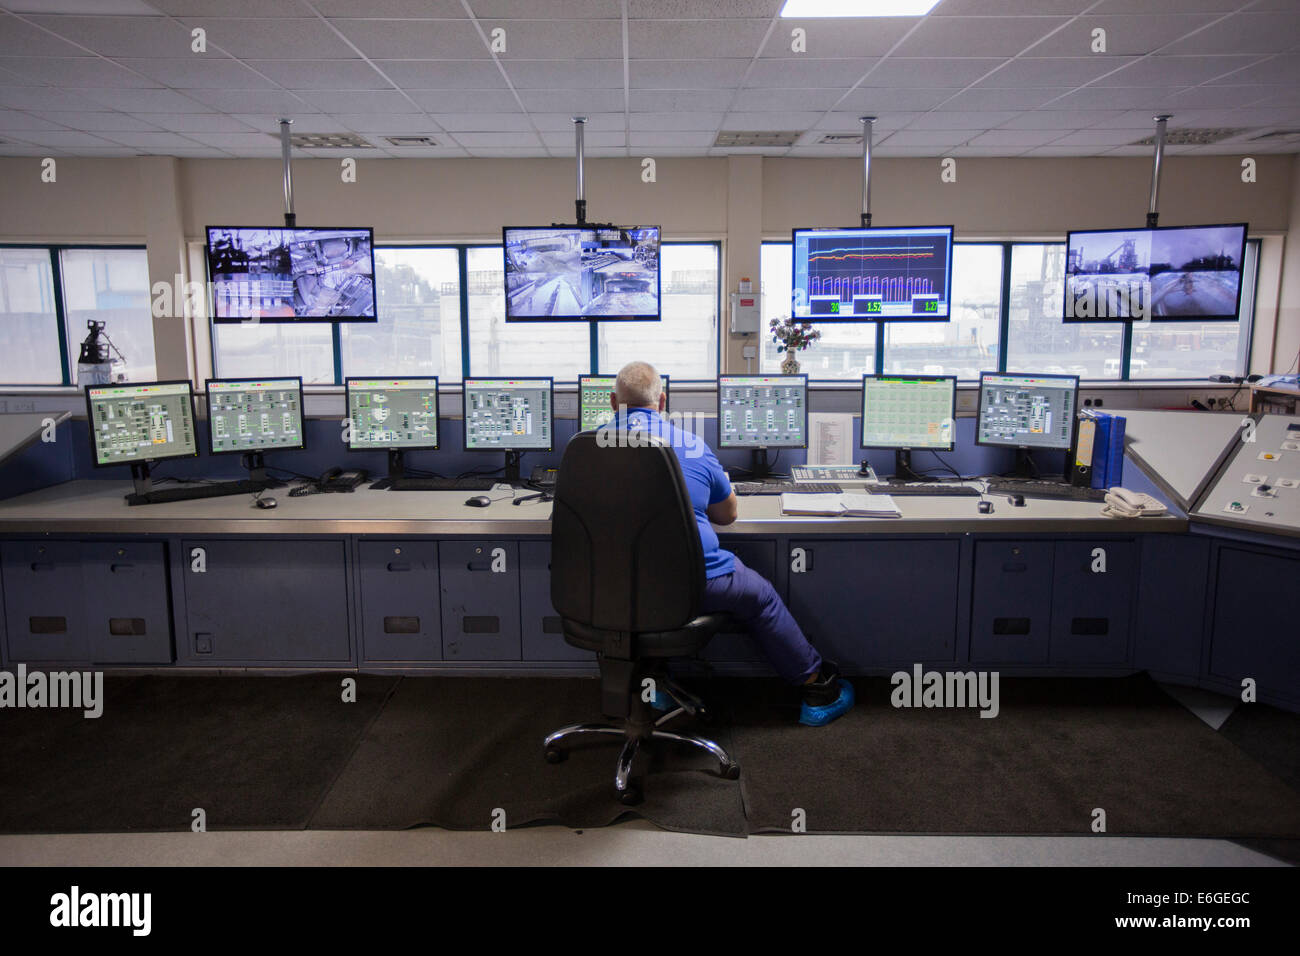 Control Room Operators In The Blast Furnace Control Room At Tata